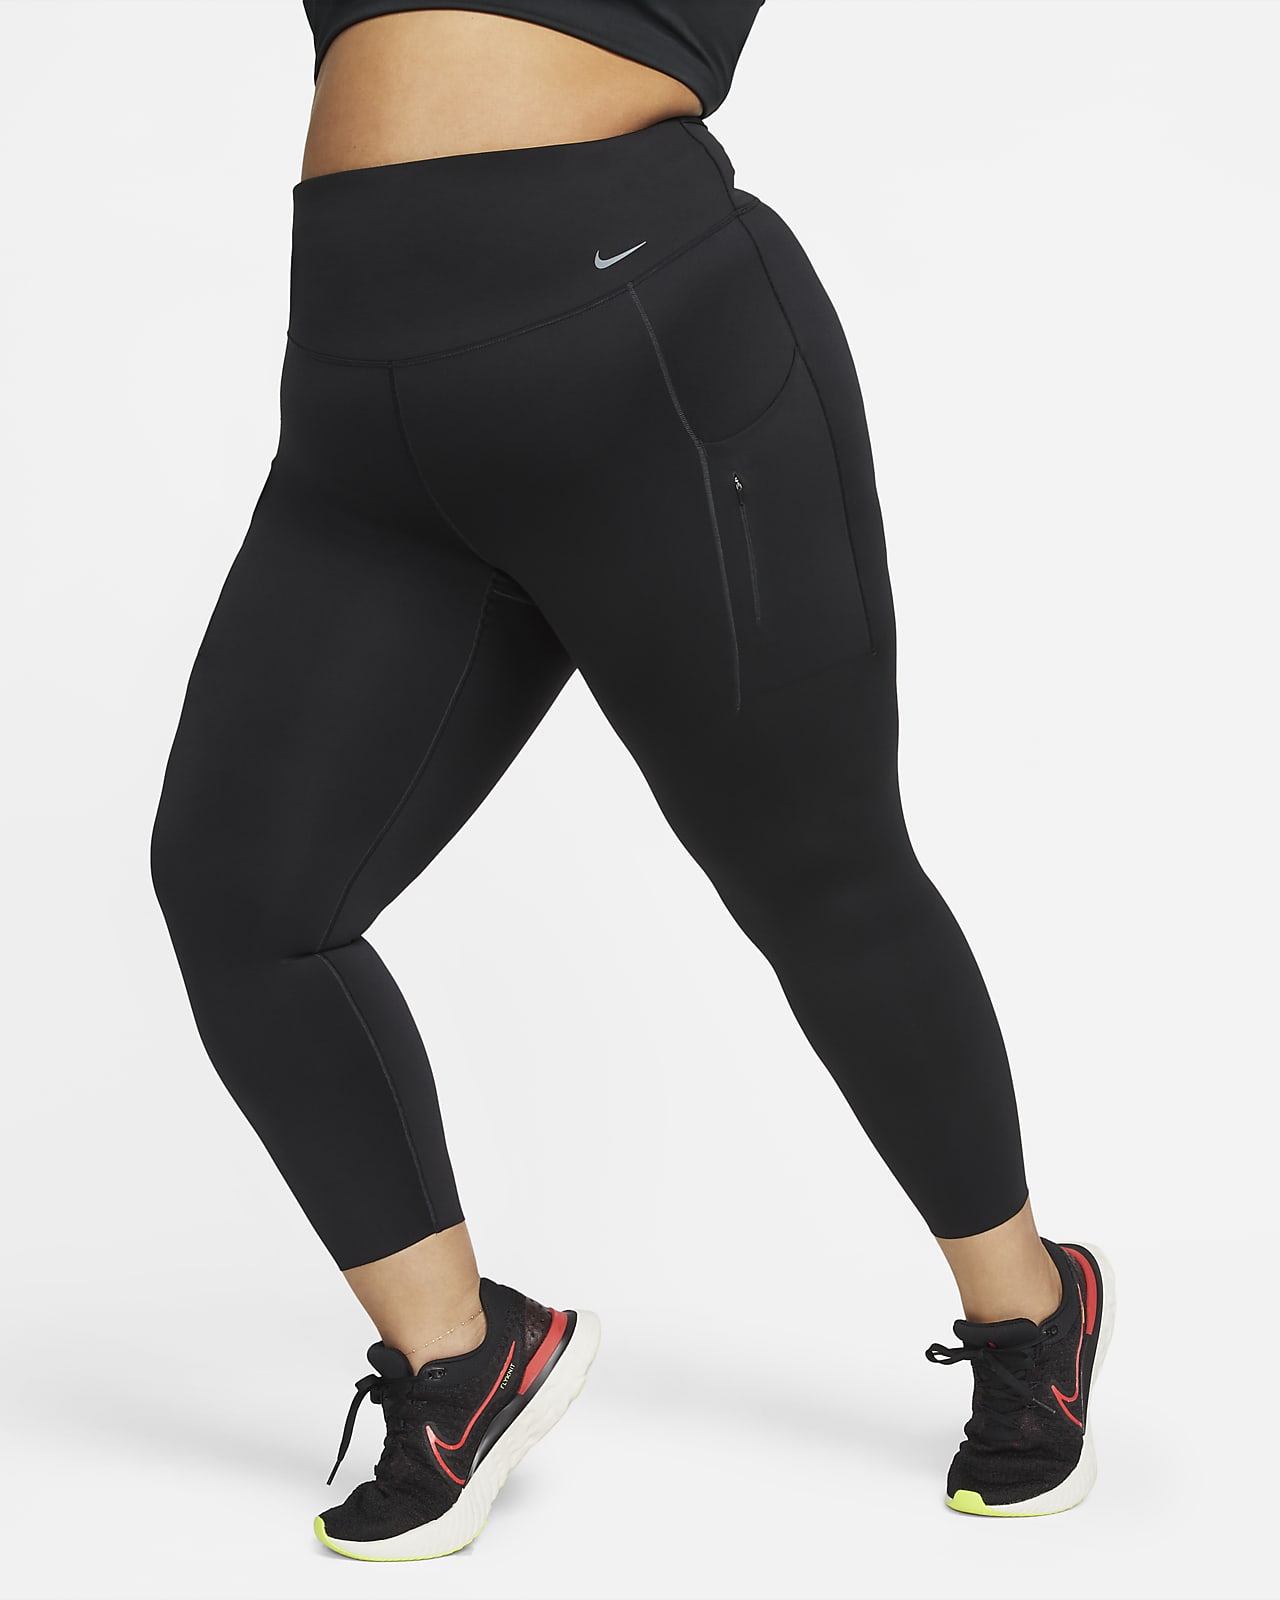 Women’s XL Nike DRI-FIT Leggings